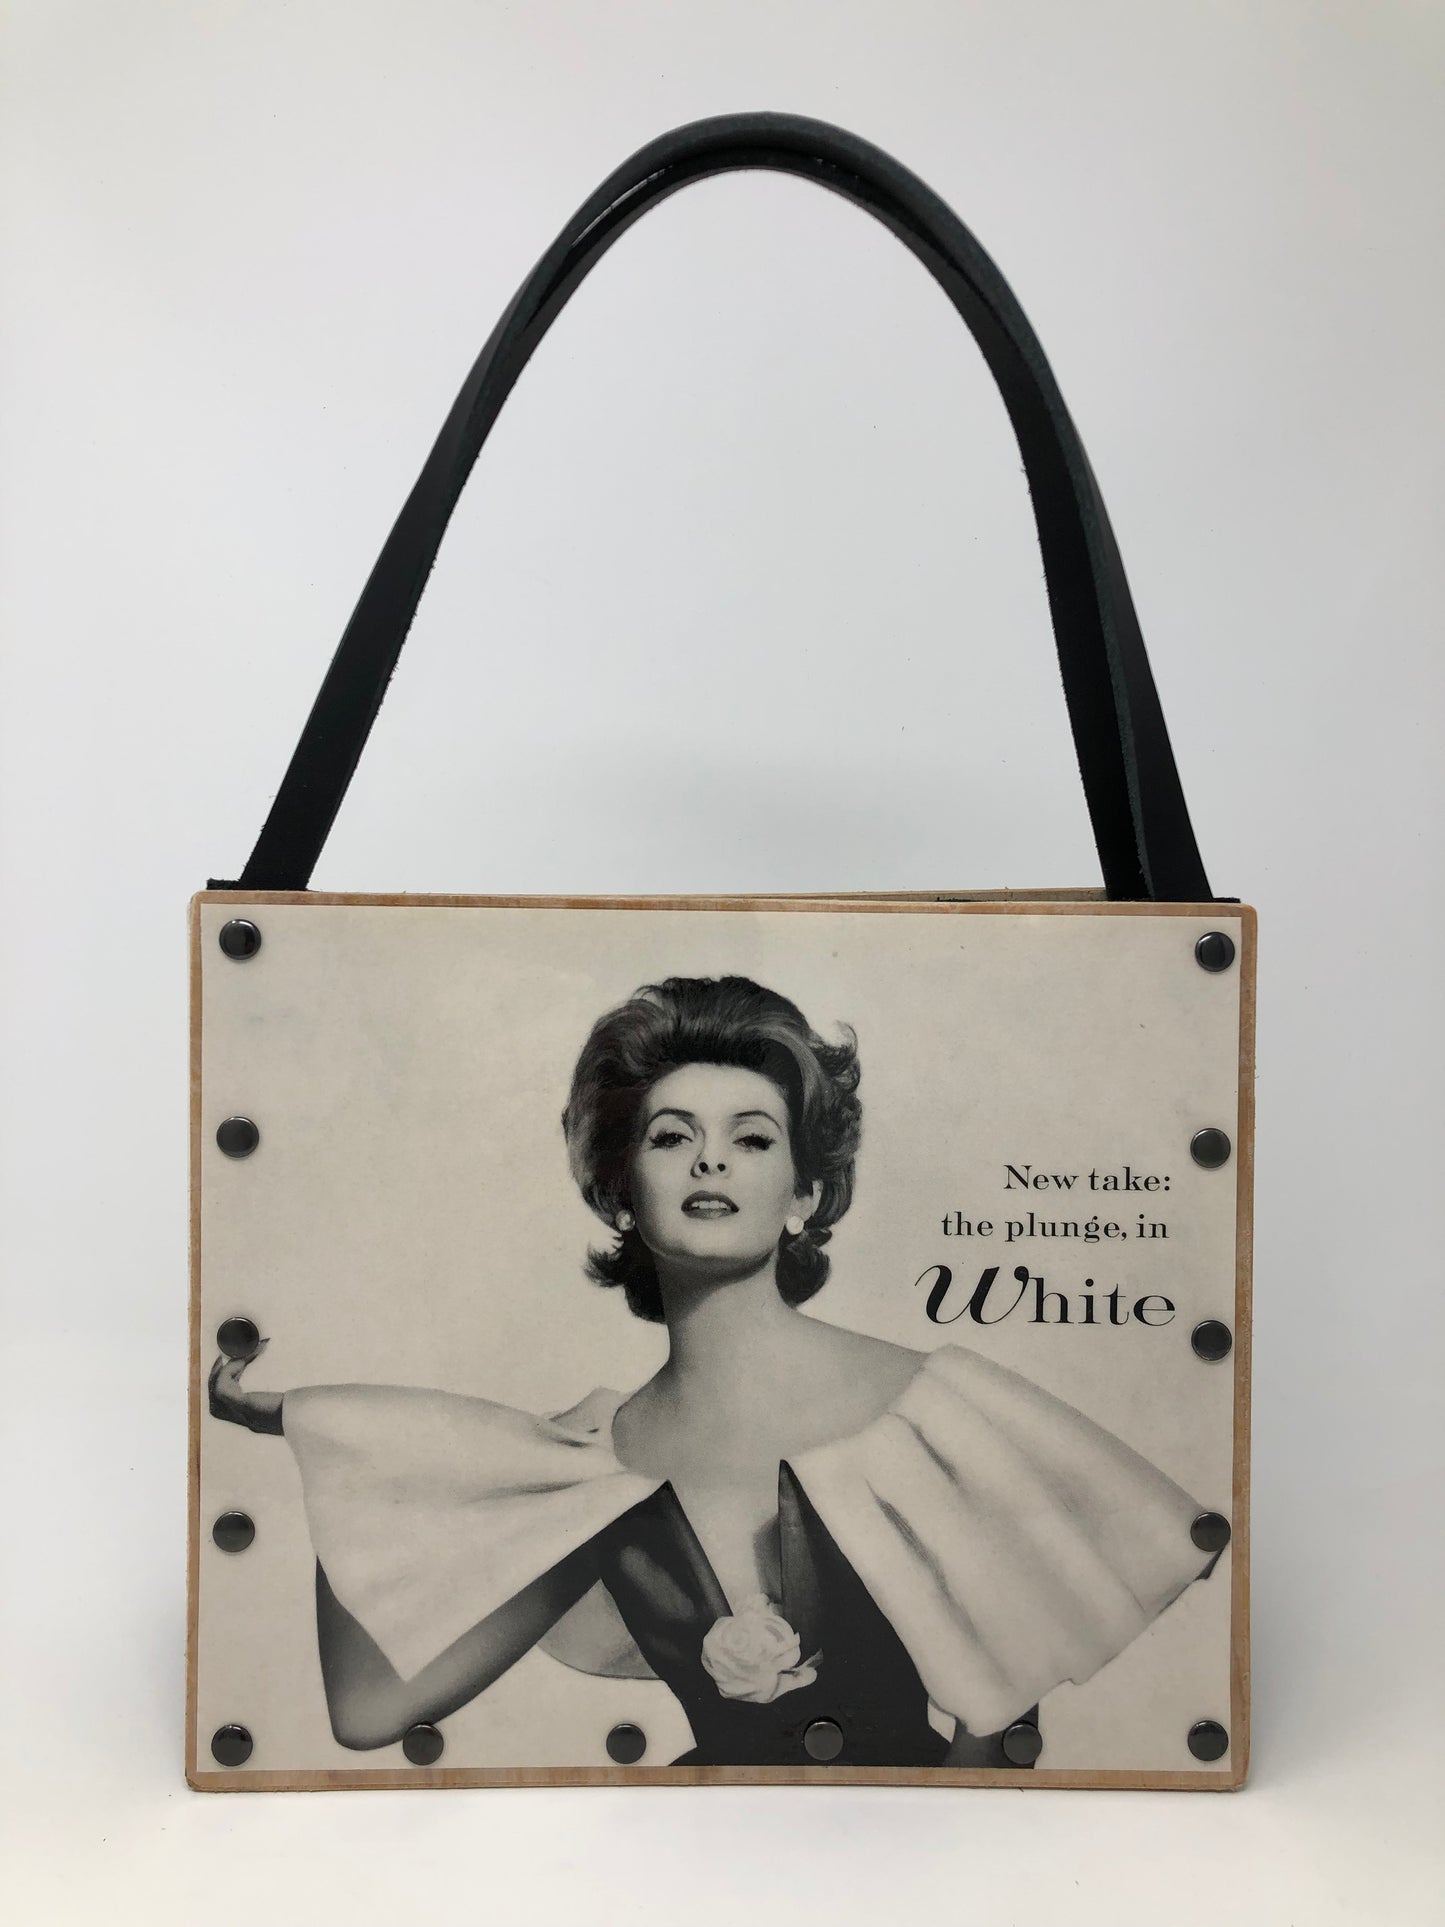 Vintage Graphics Handbag - Take the Plunge Ad from Vogue 1959